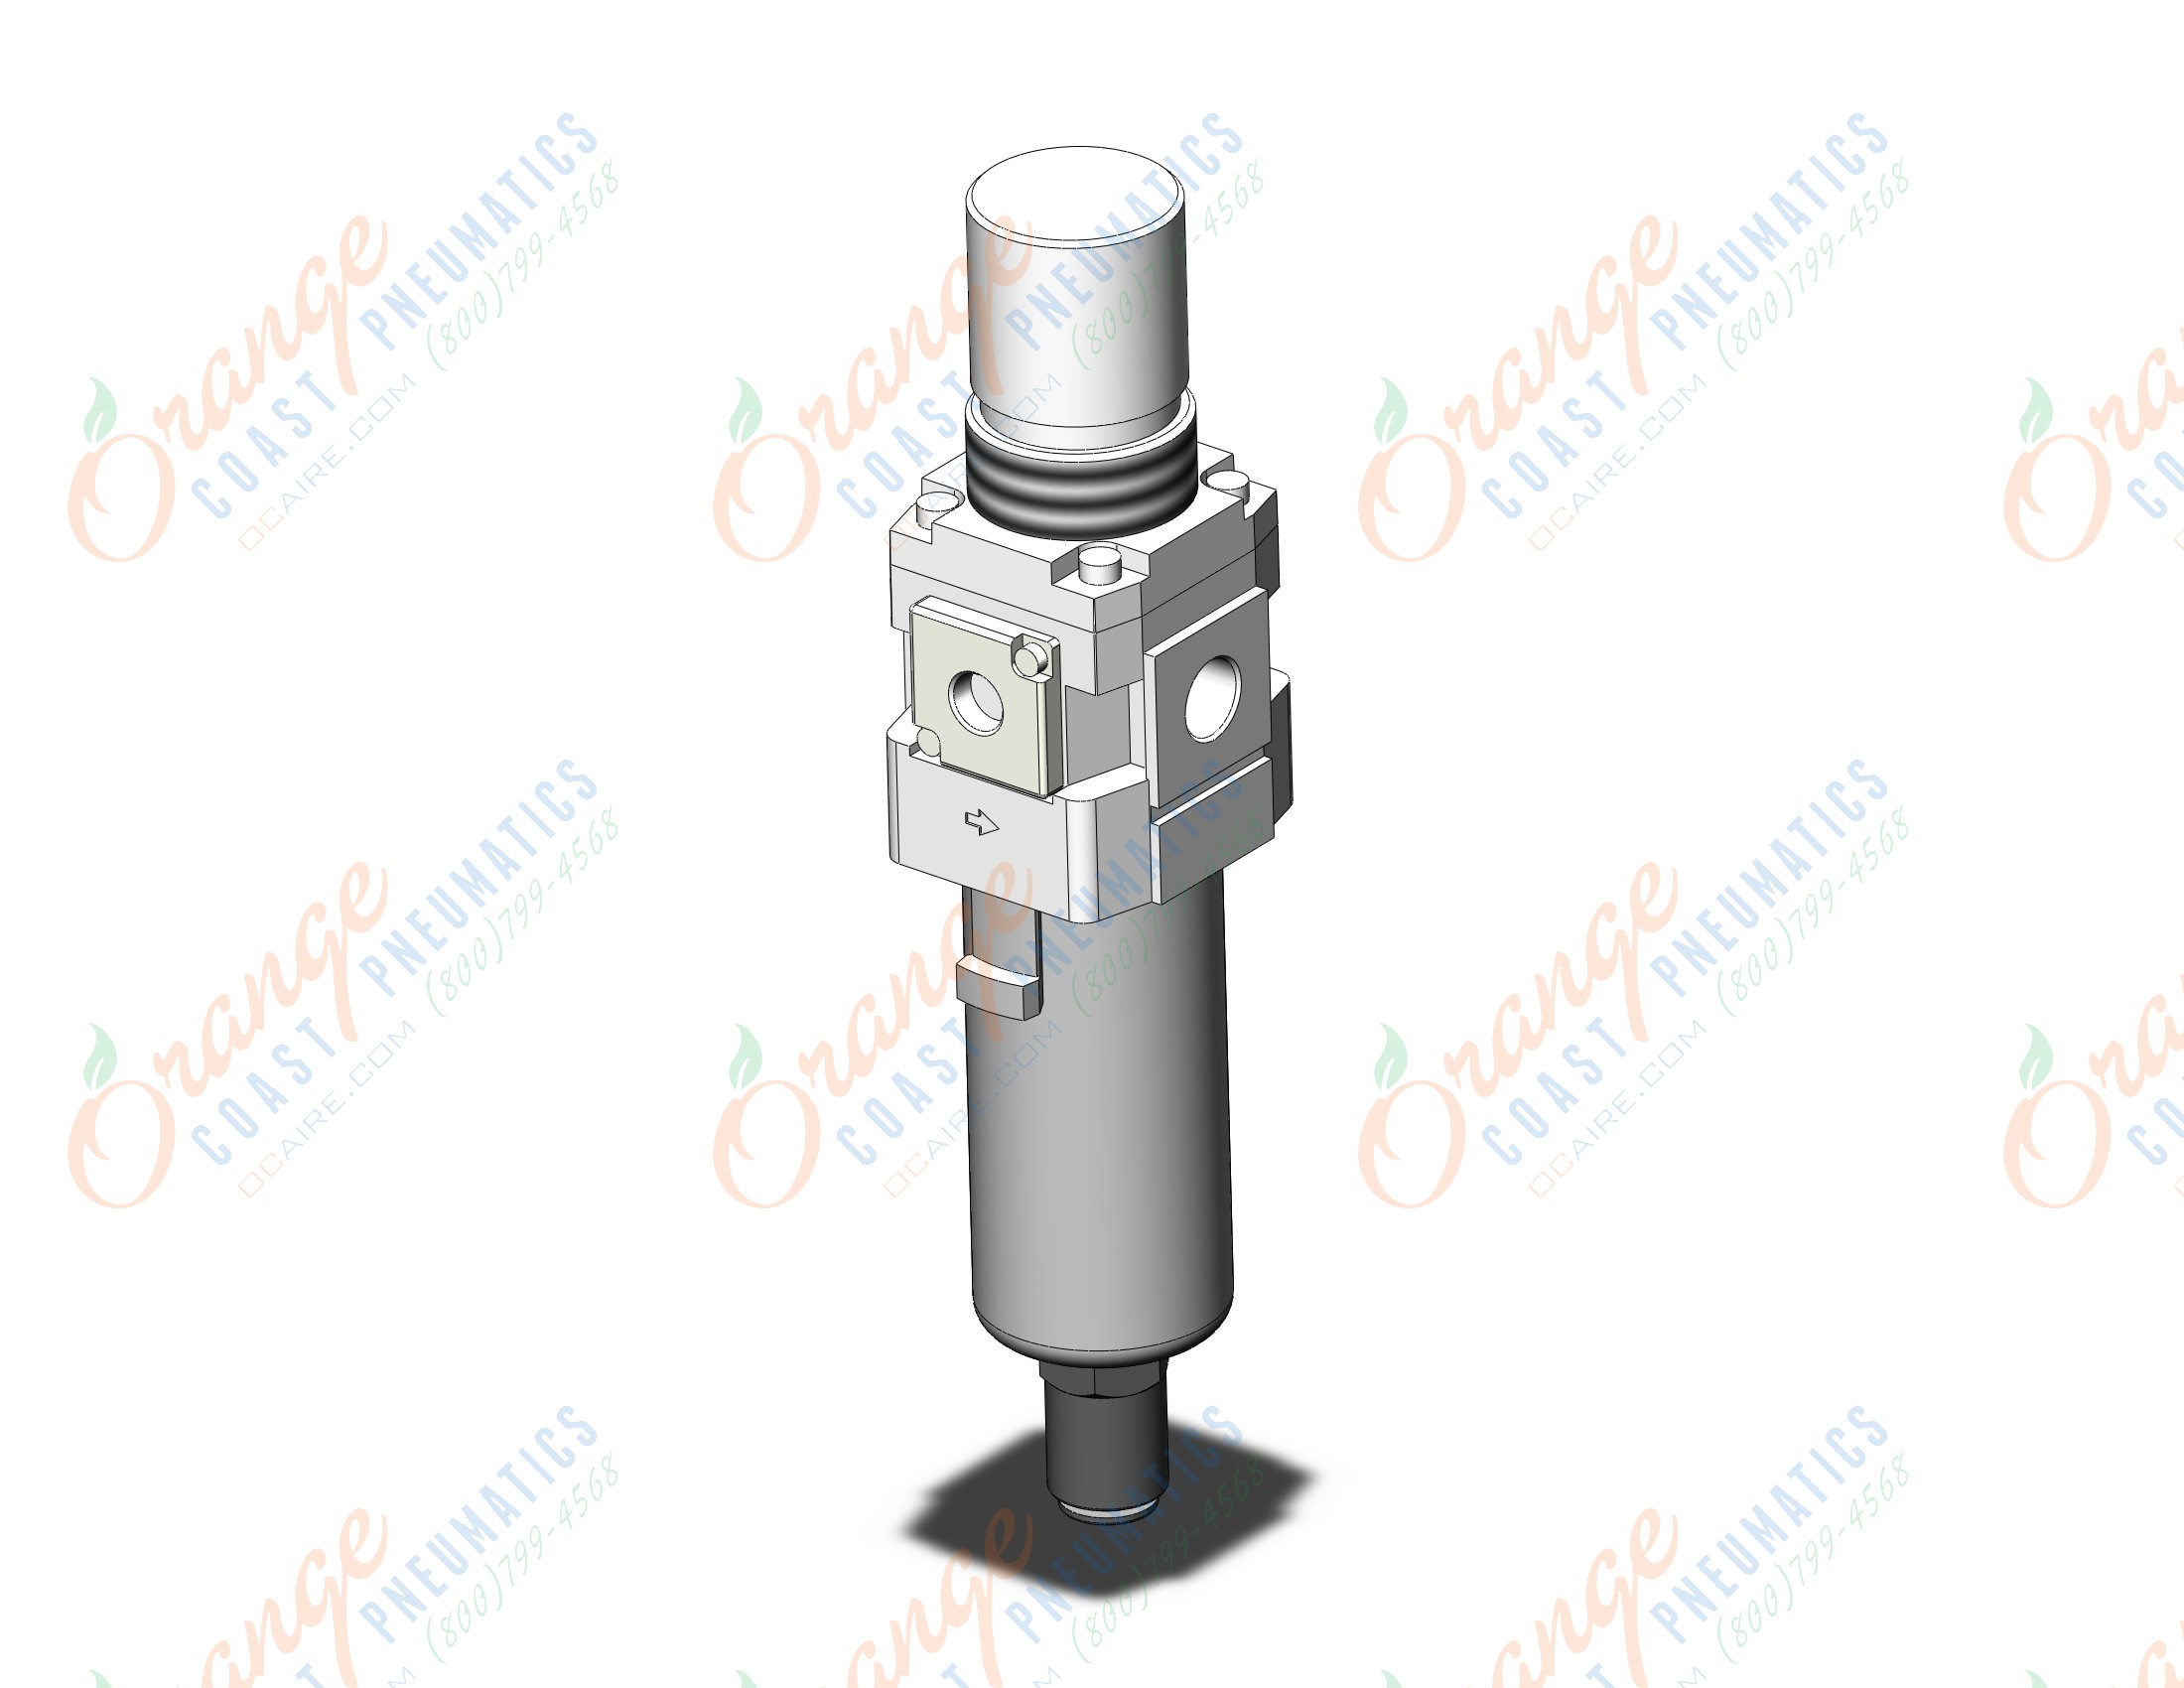 SMC AW30-N02C-12Z-B filter/regulator, FILTER/REGULATOR, MODULAR F.R.L.